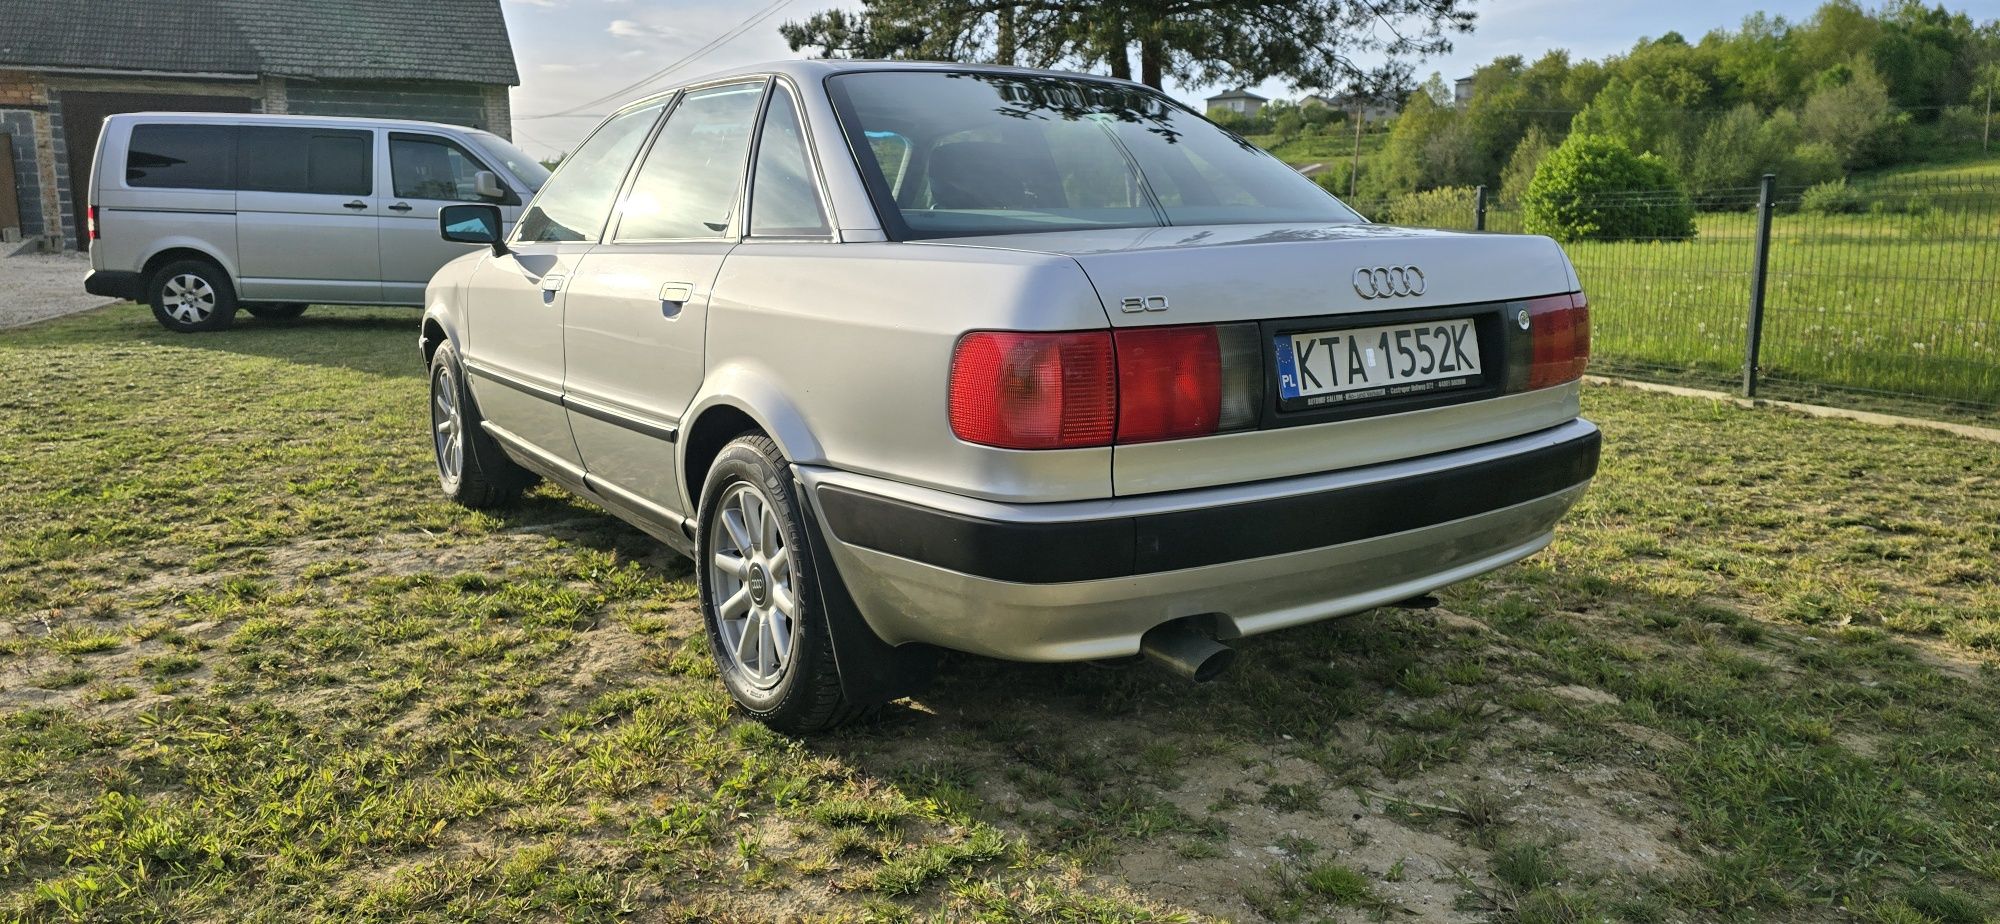 Audi 80 2.0 Automat 149 tyś YOUNGTIMER/KLASYK